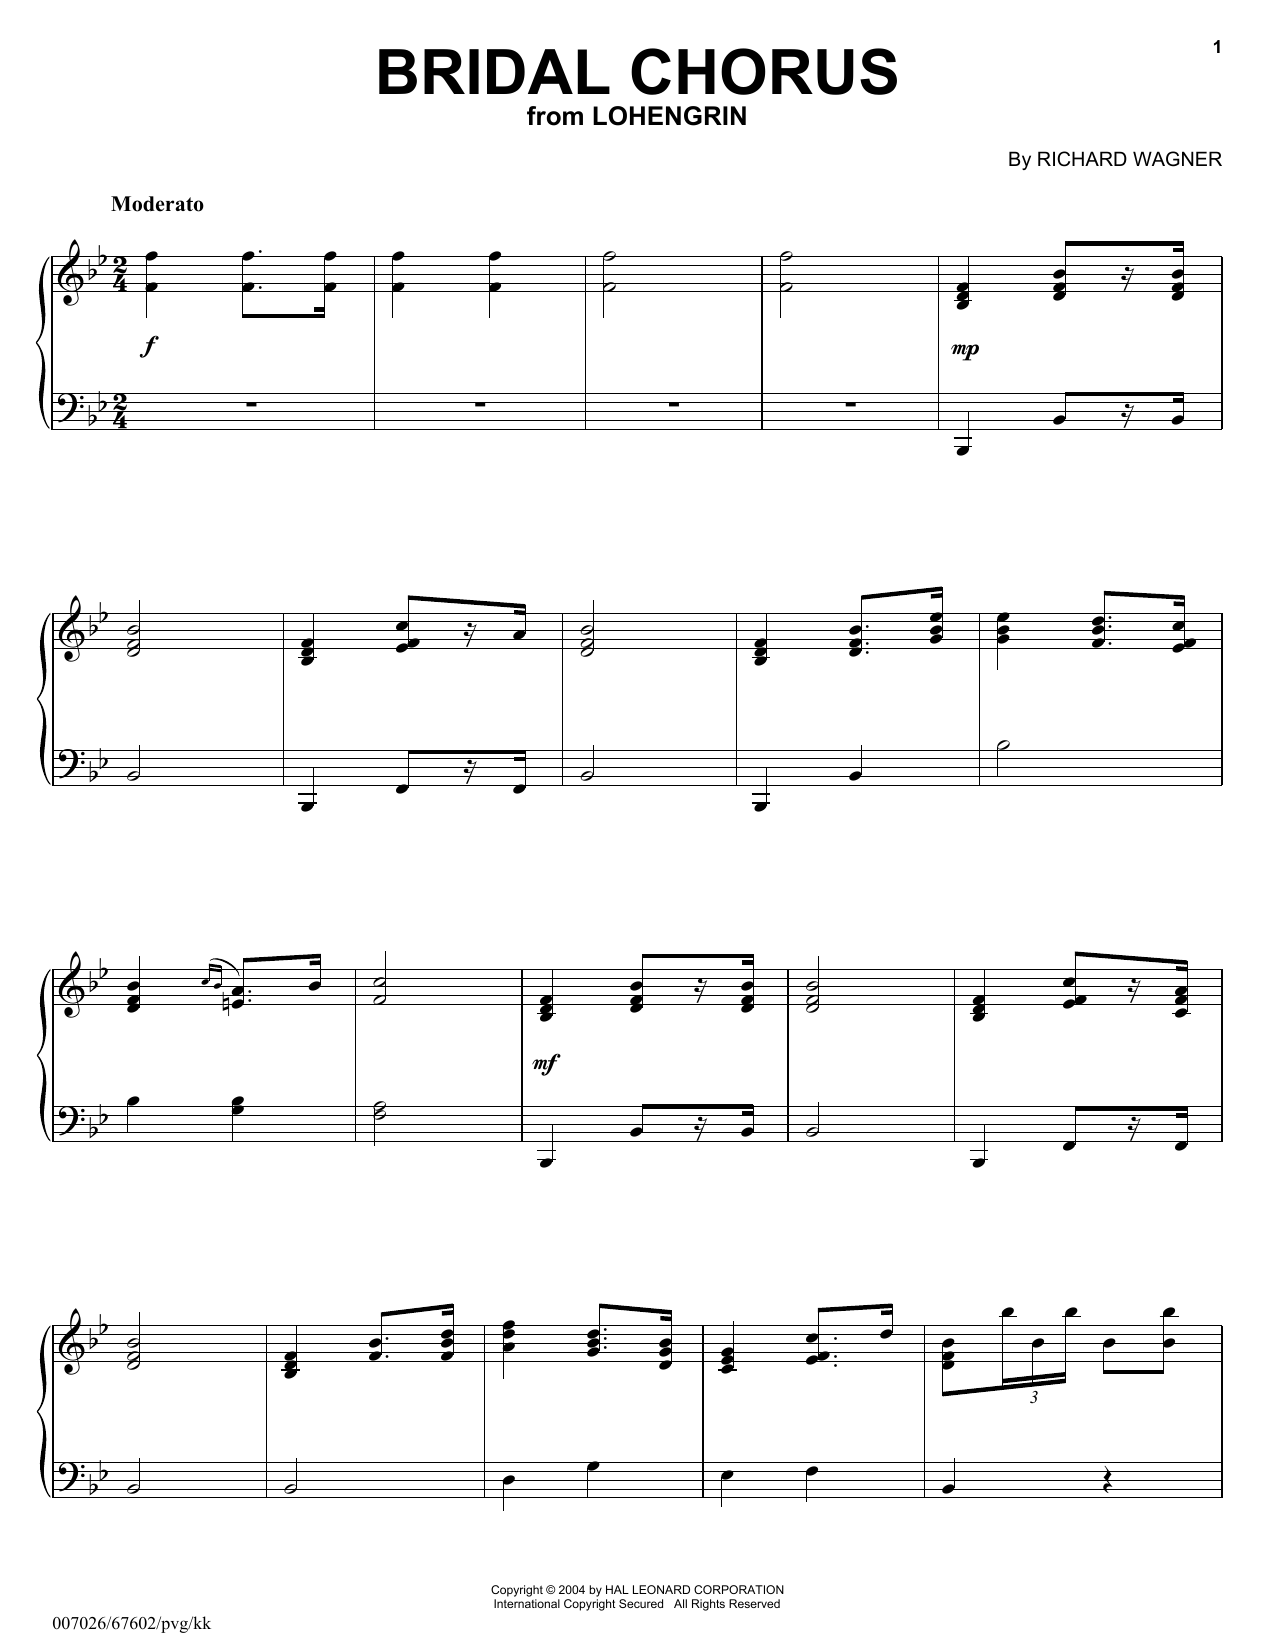 Richard Wagner Bridal Chorus Sheet Music Notes & Chords for Piano Solo - Download or Print PDF